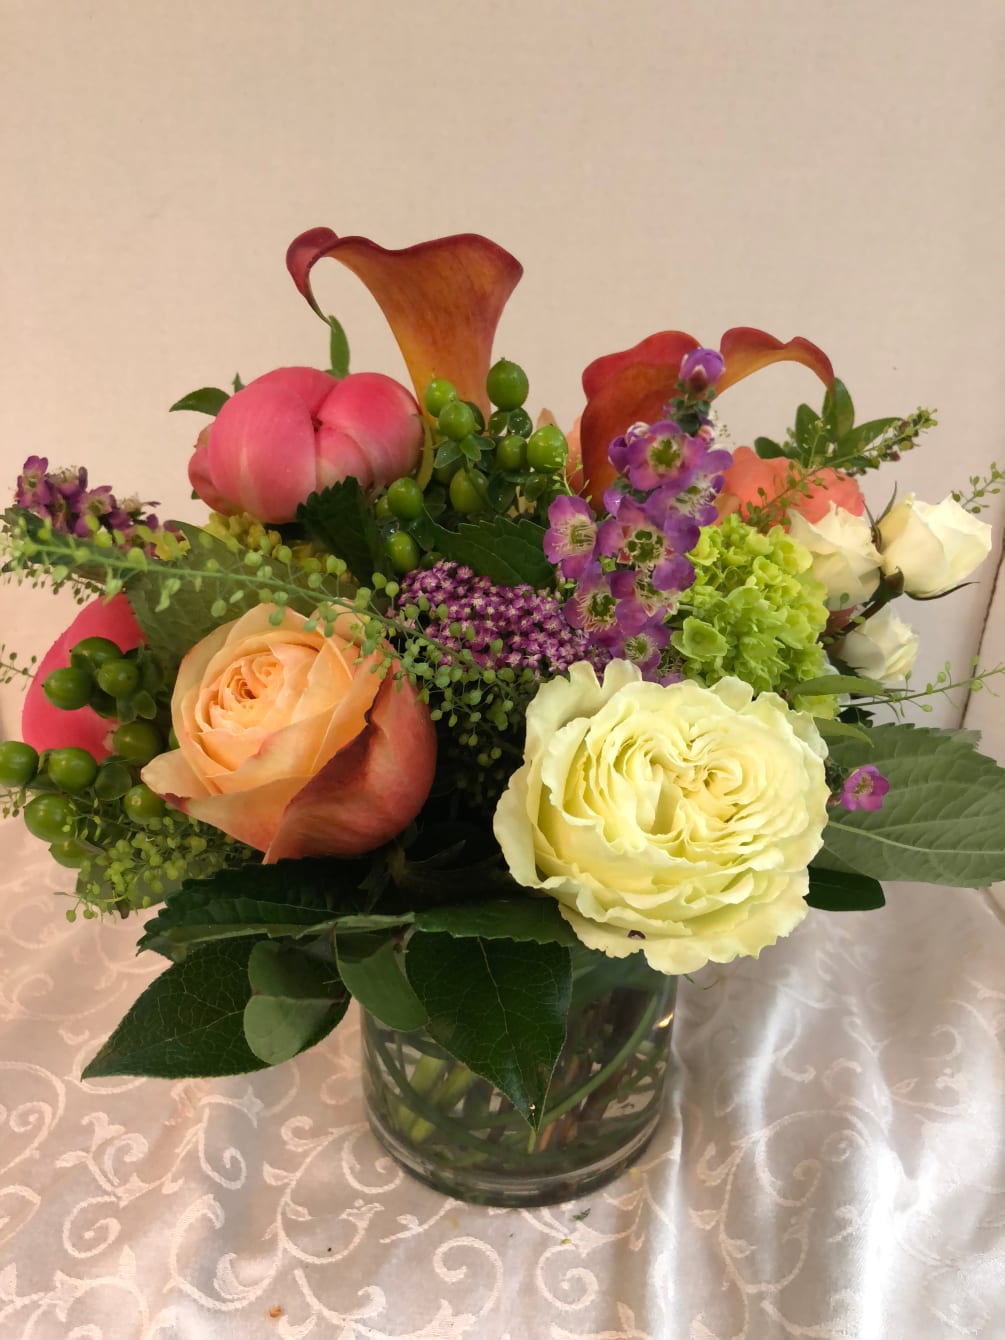 Roses, Peonies(Seasonal), Hydrangea, Calla-Liliy, Hypericum,  Fancy Greens
Seasonal Flowers not available will